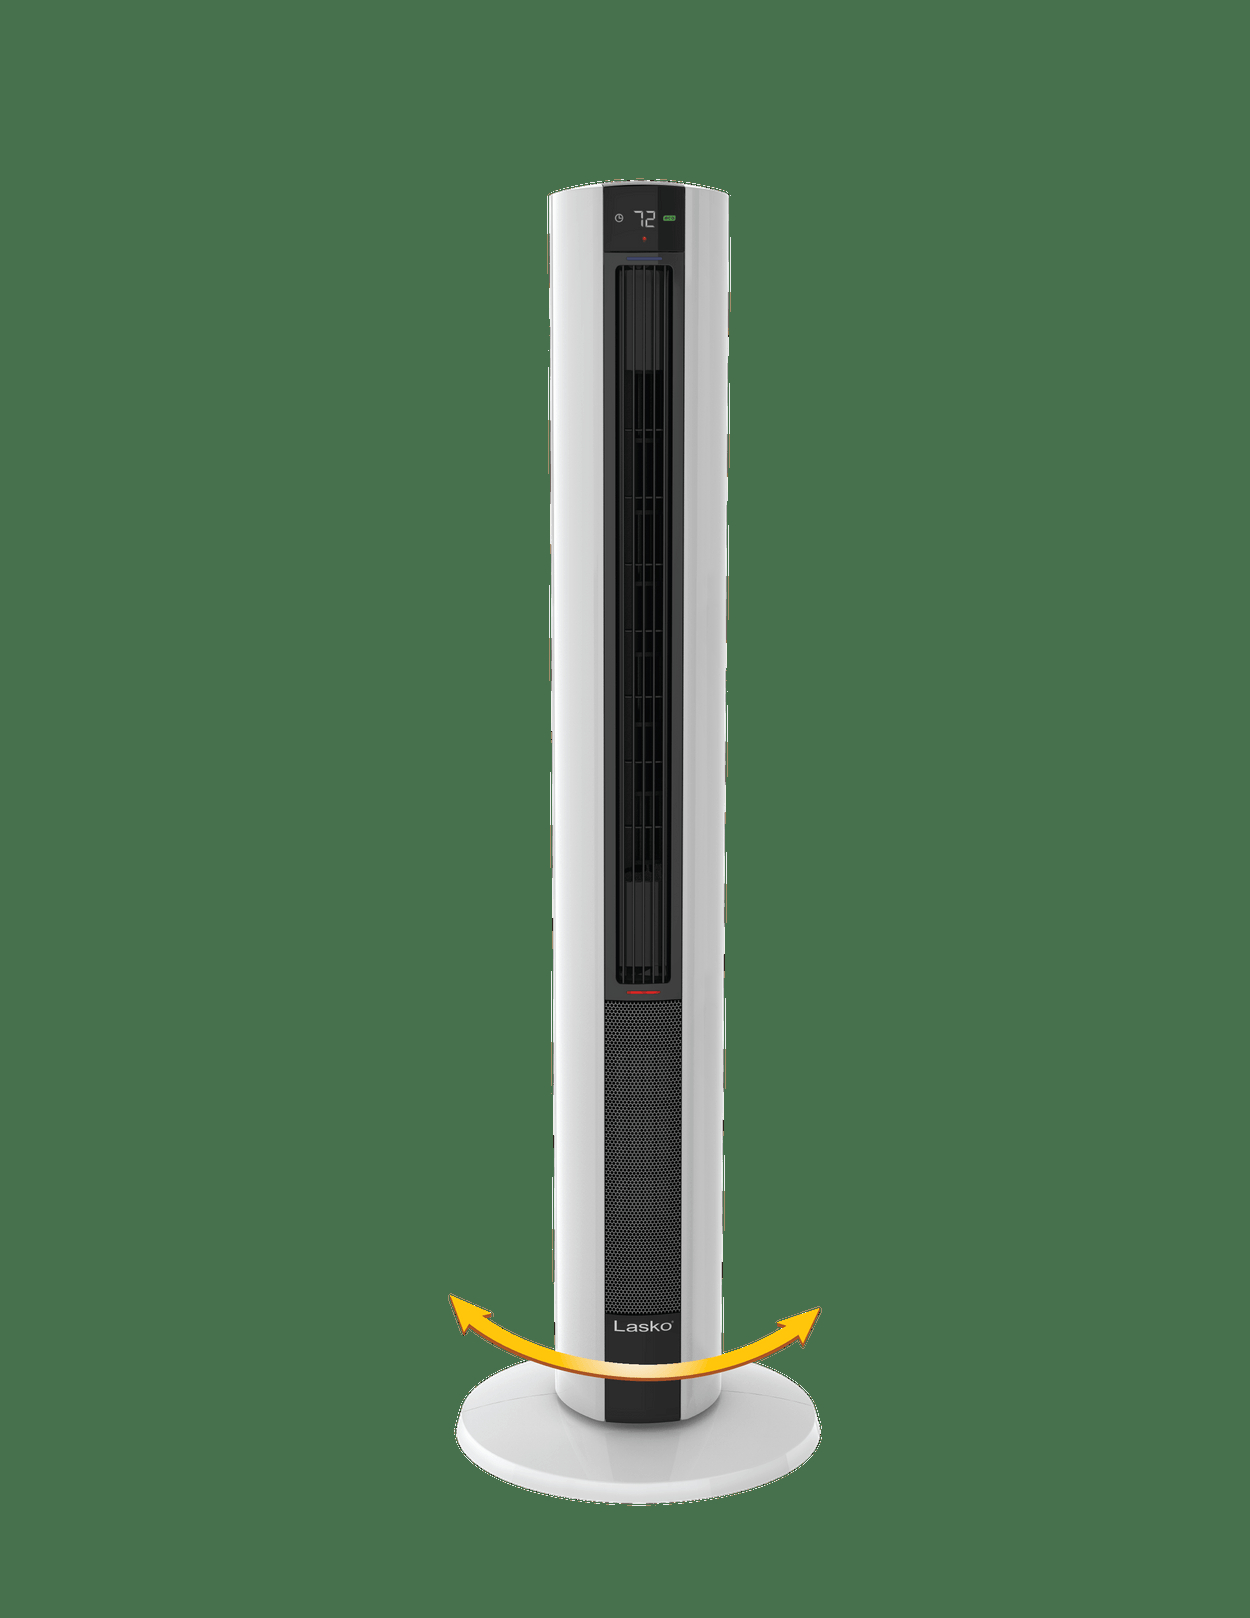 Lasko All Season Tower Fan Heater In One with regard to dimensions 1250 X 1618